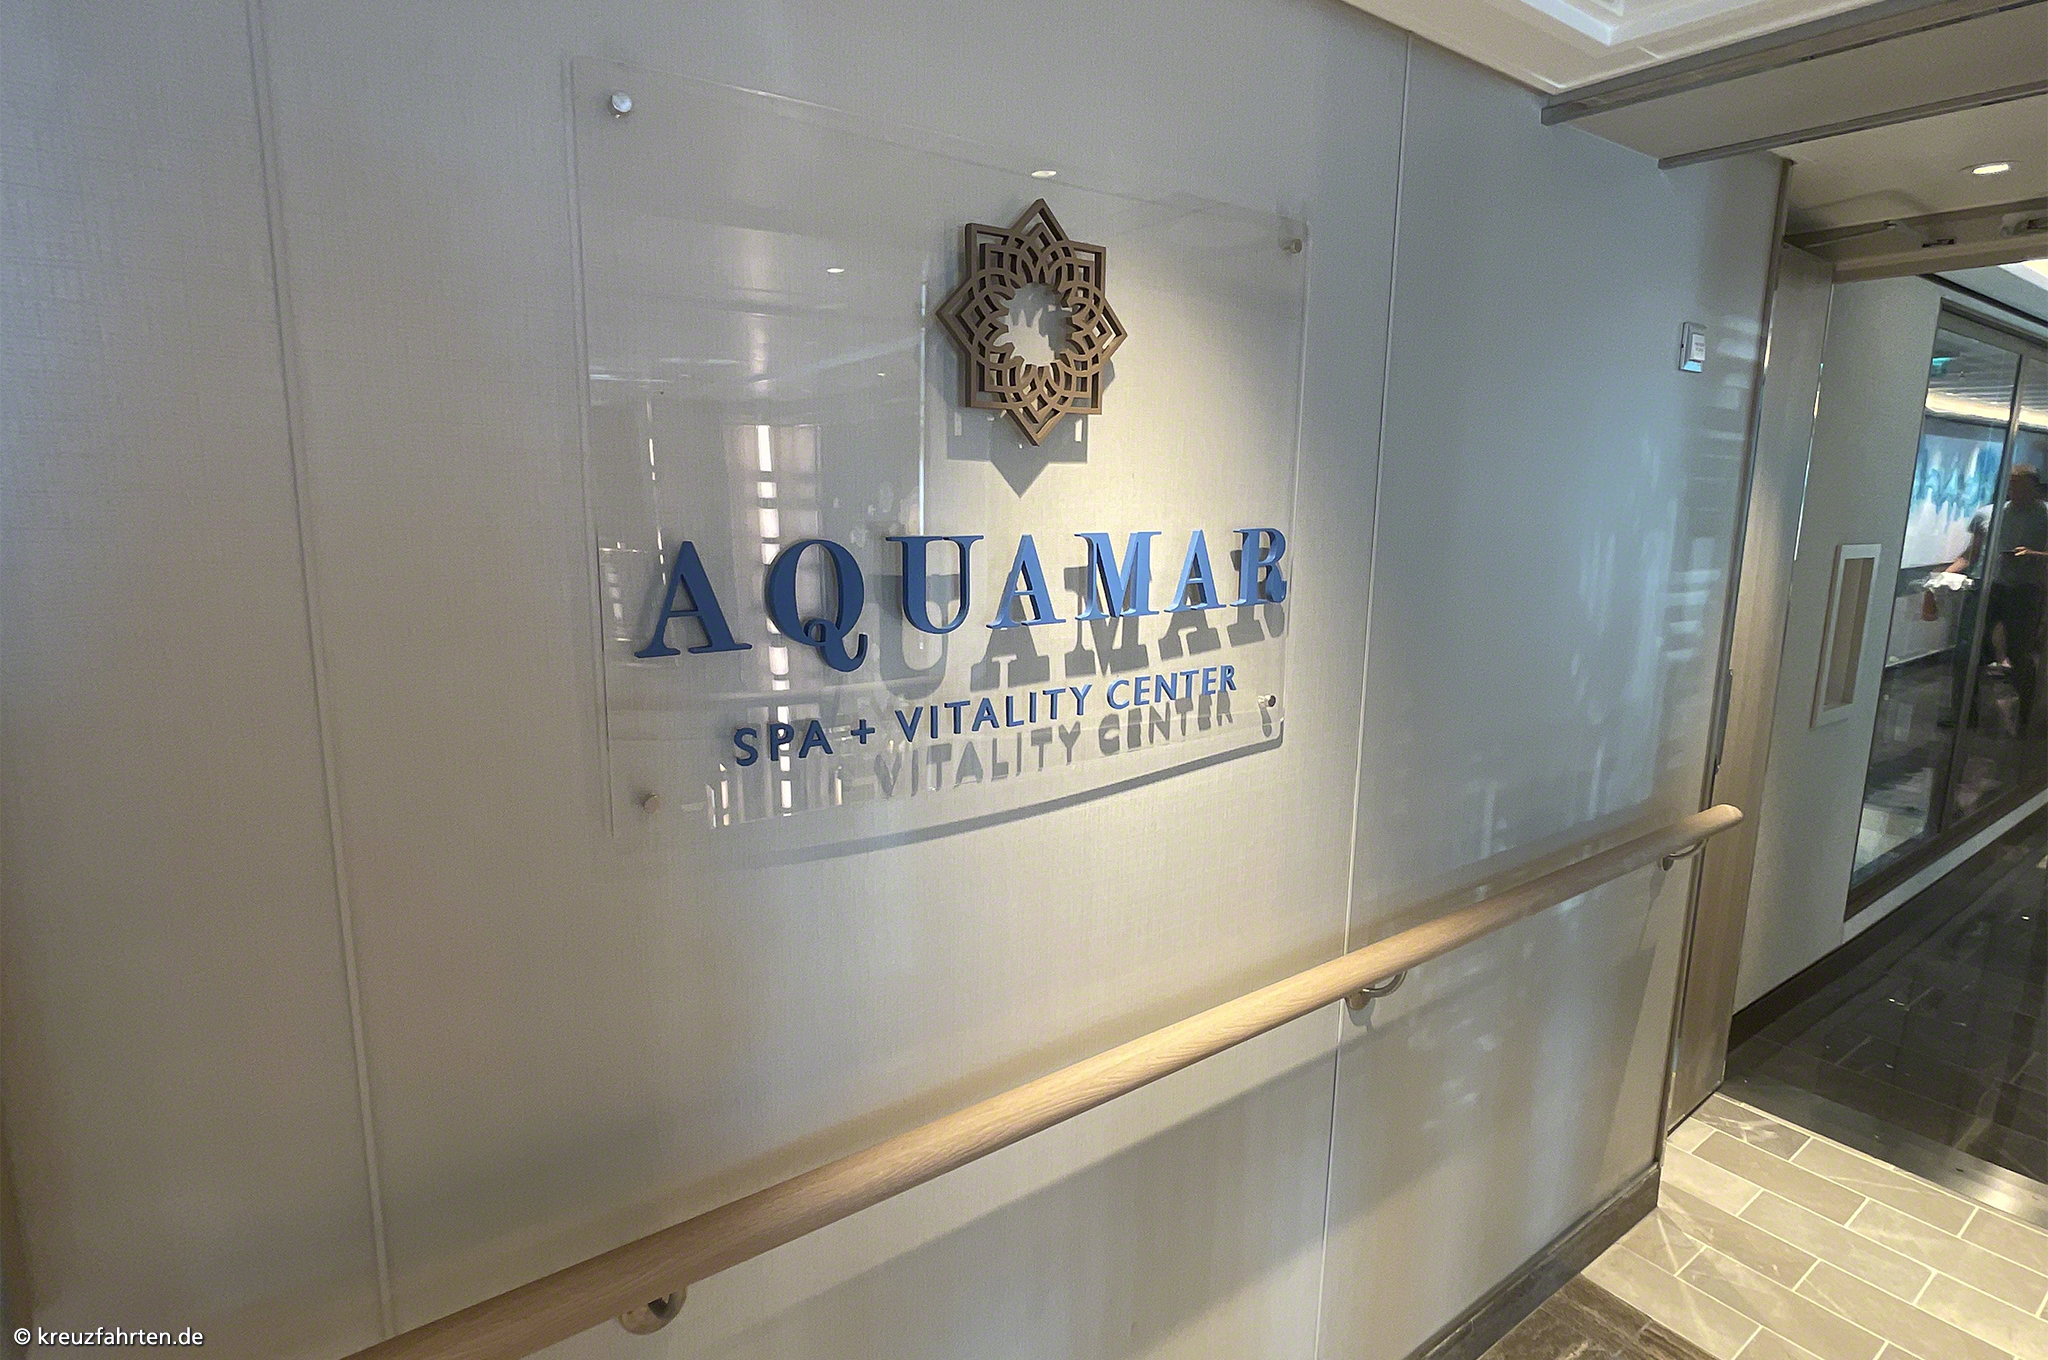 Aquamar Spa & Vitality Center